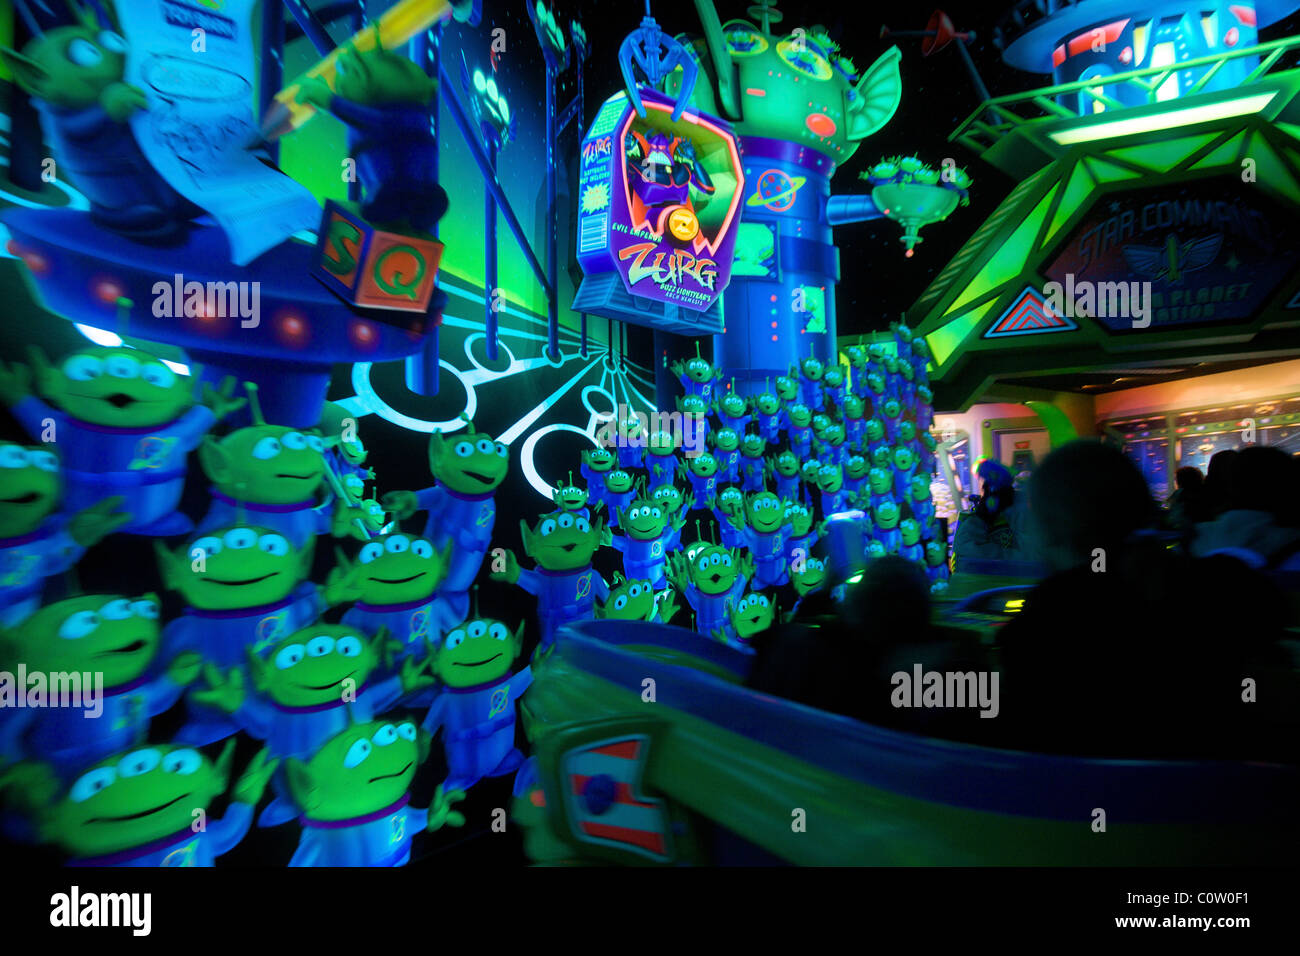 Buzz Lightyear Laser Blast ride at Disneyland Paris Stock Photo - Alamy